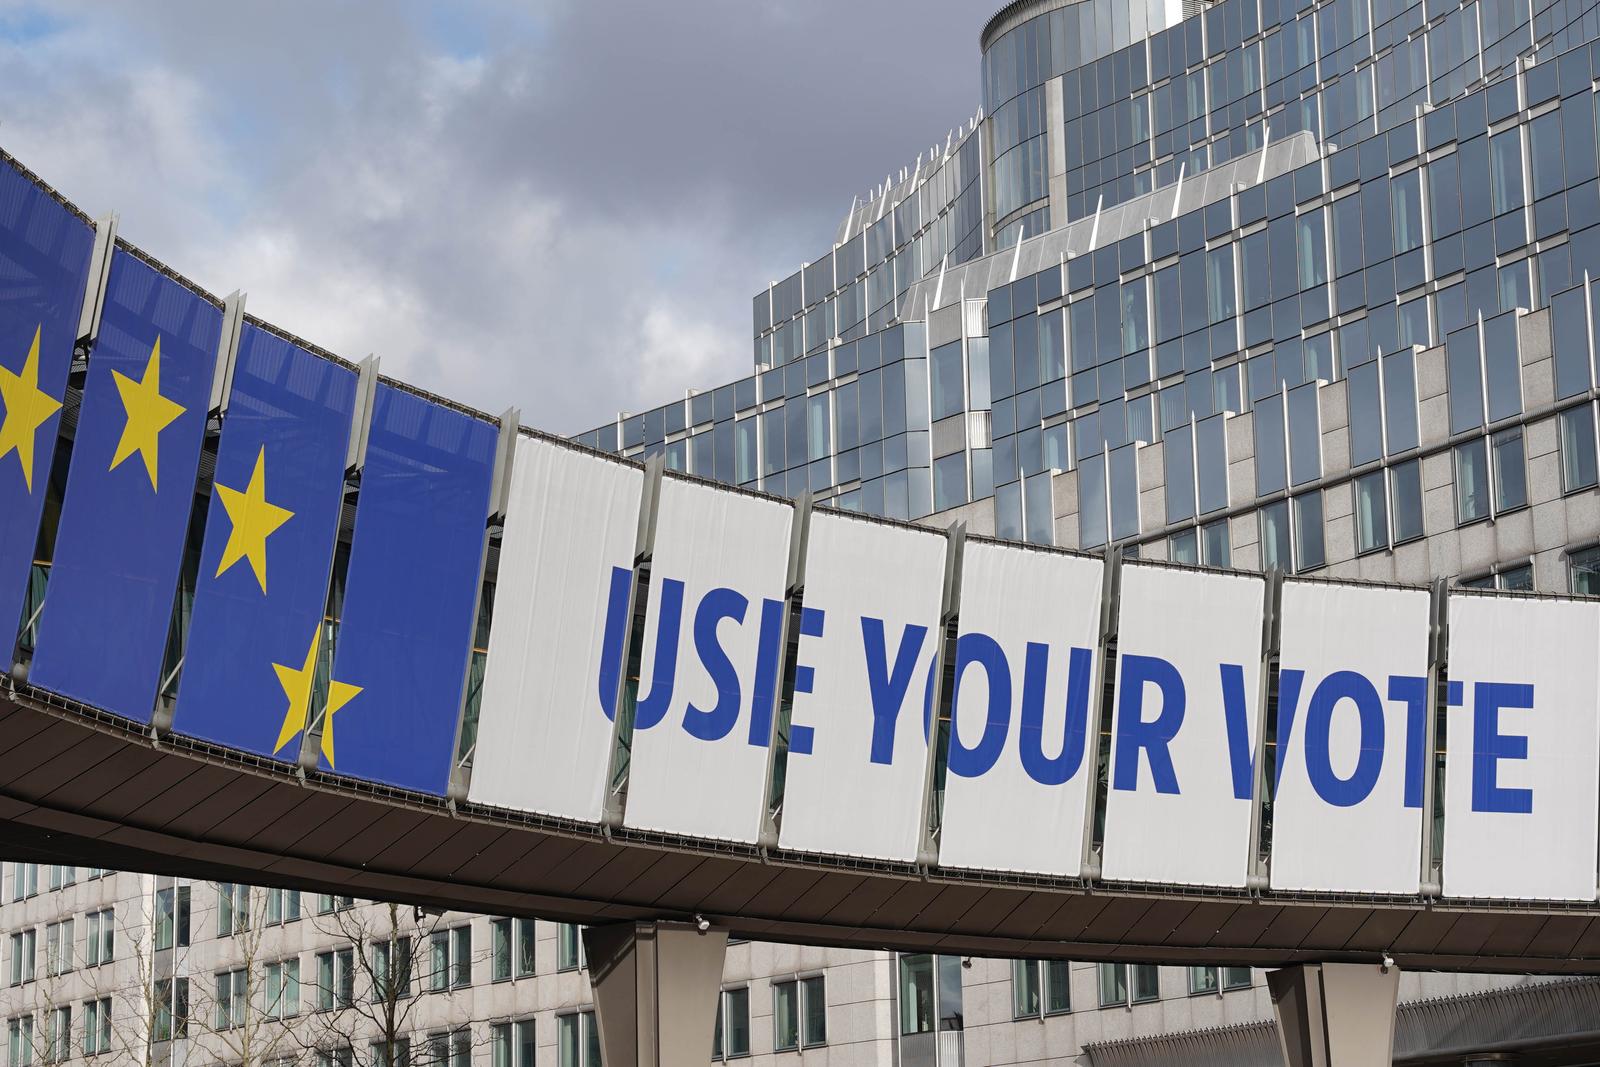 05.03.2024., Bruxelles, Belgija - Zgrada Europskog parlamenta u Bruxellesu. Na platou ispred parlamenta sve je u znaku predstojecih izbora za Europski parlament. Photo: Dejan Rakita/PIXSELL